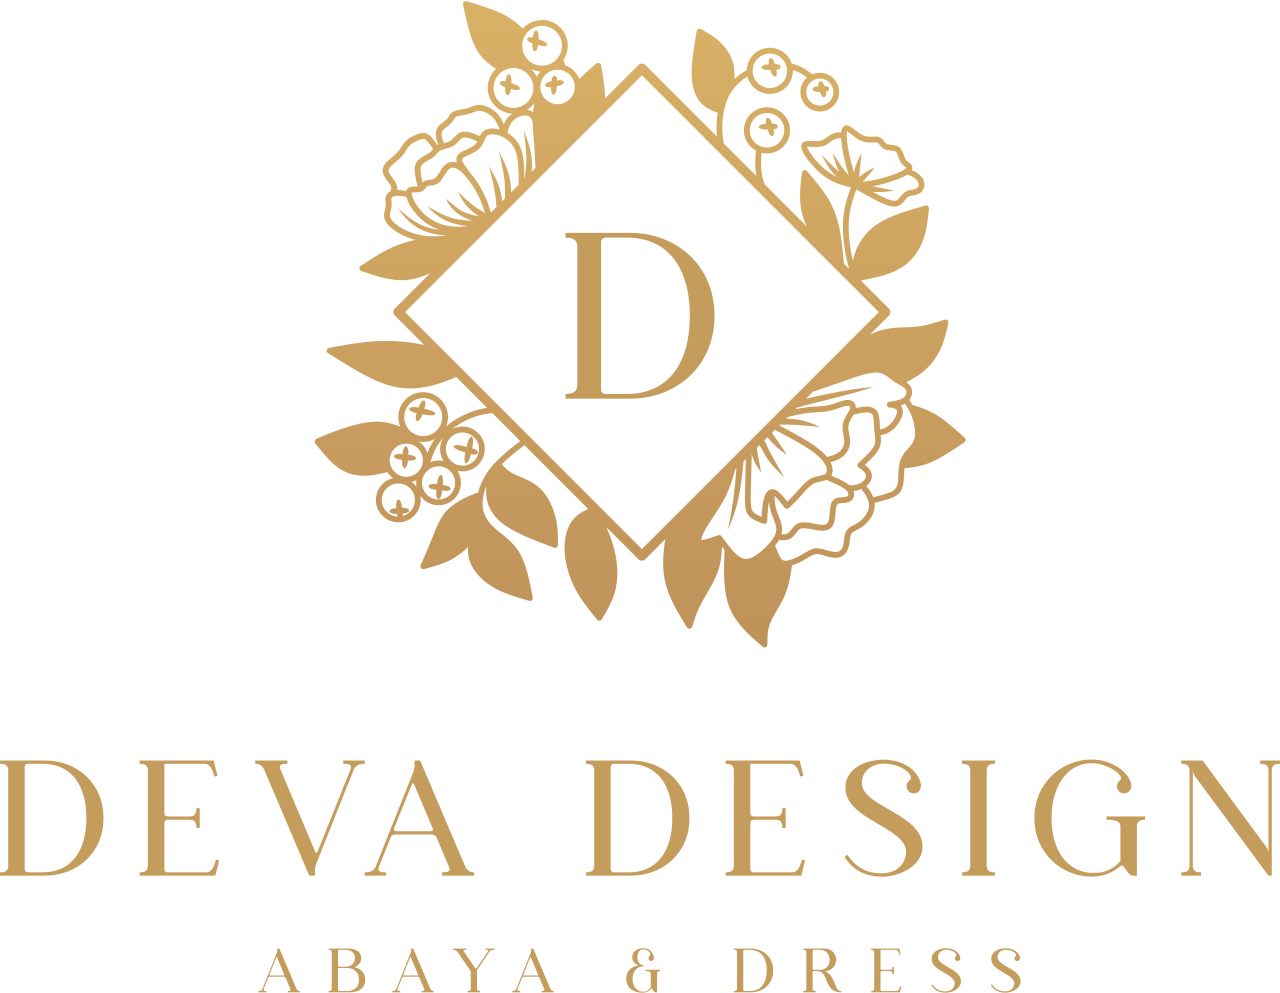 Deva design's logo